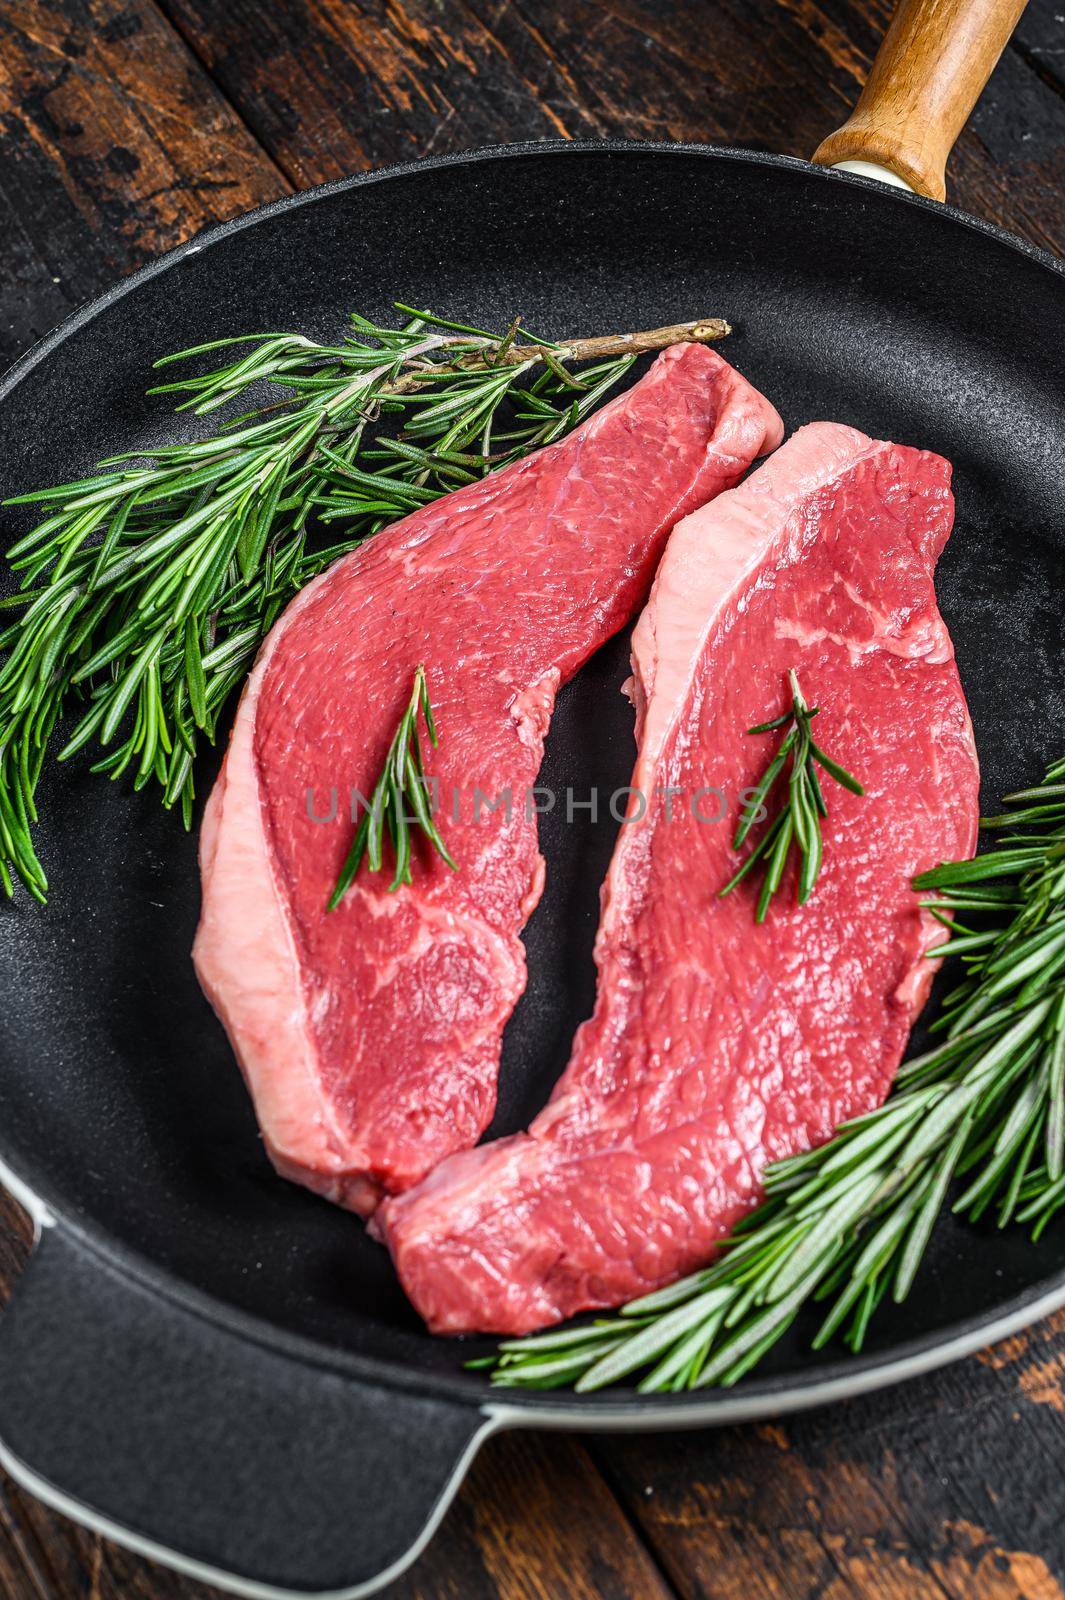 Raw beef meat rump steak in a pan. Dark wooden background. Top view.